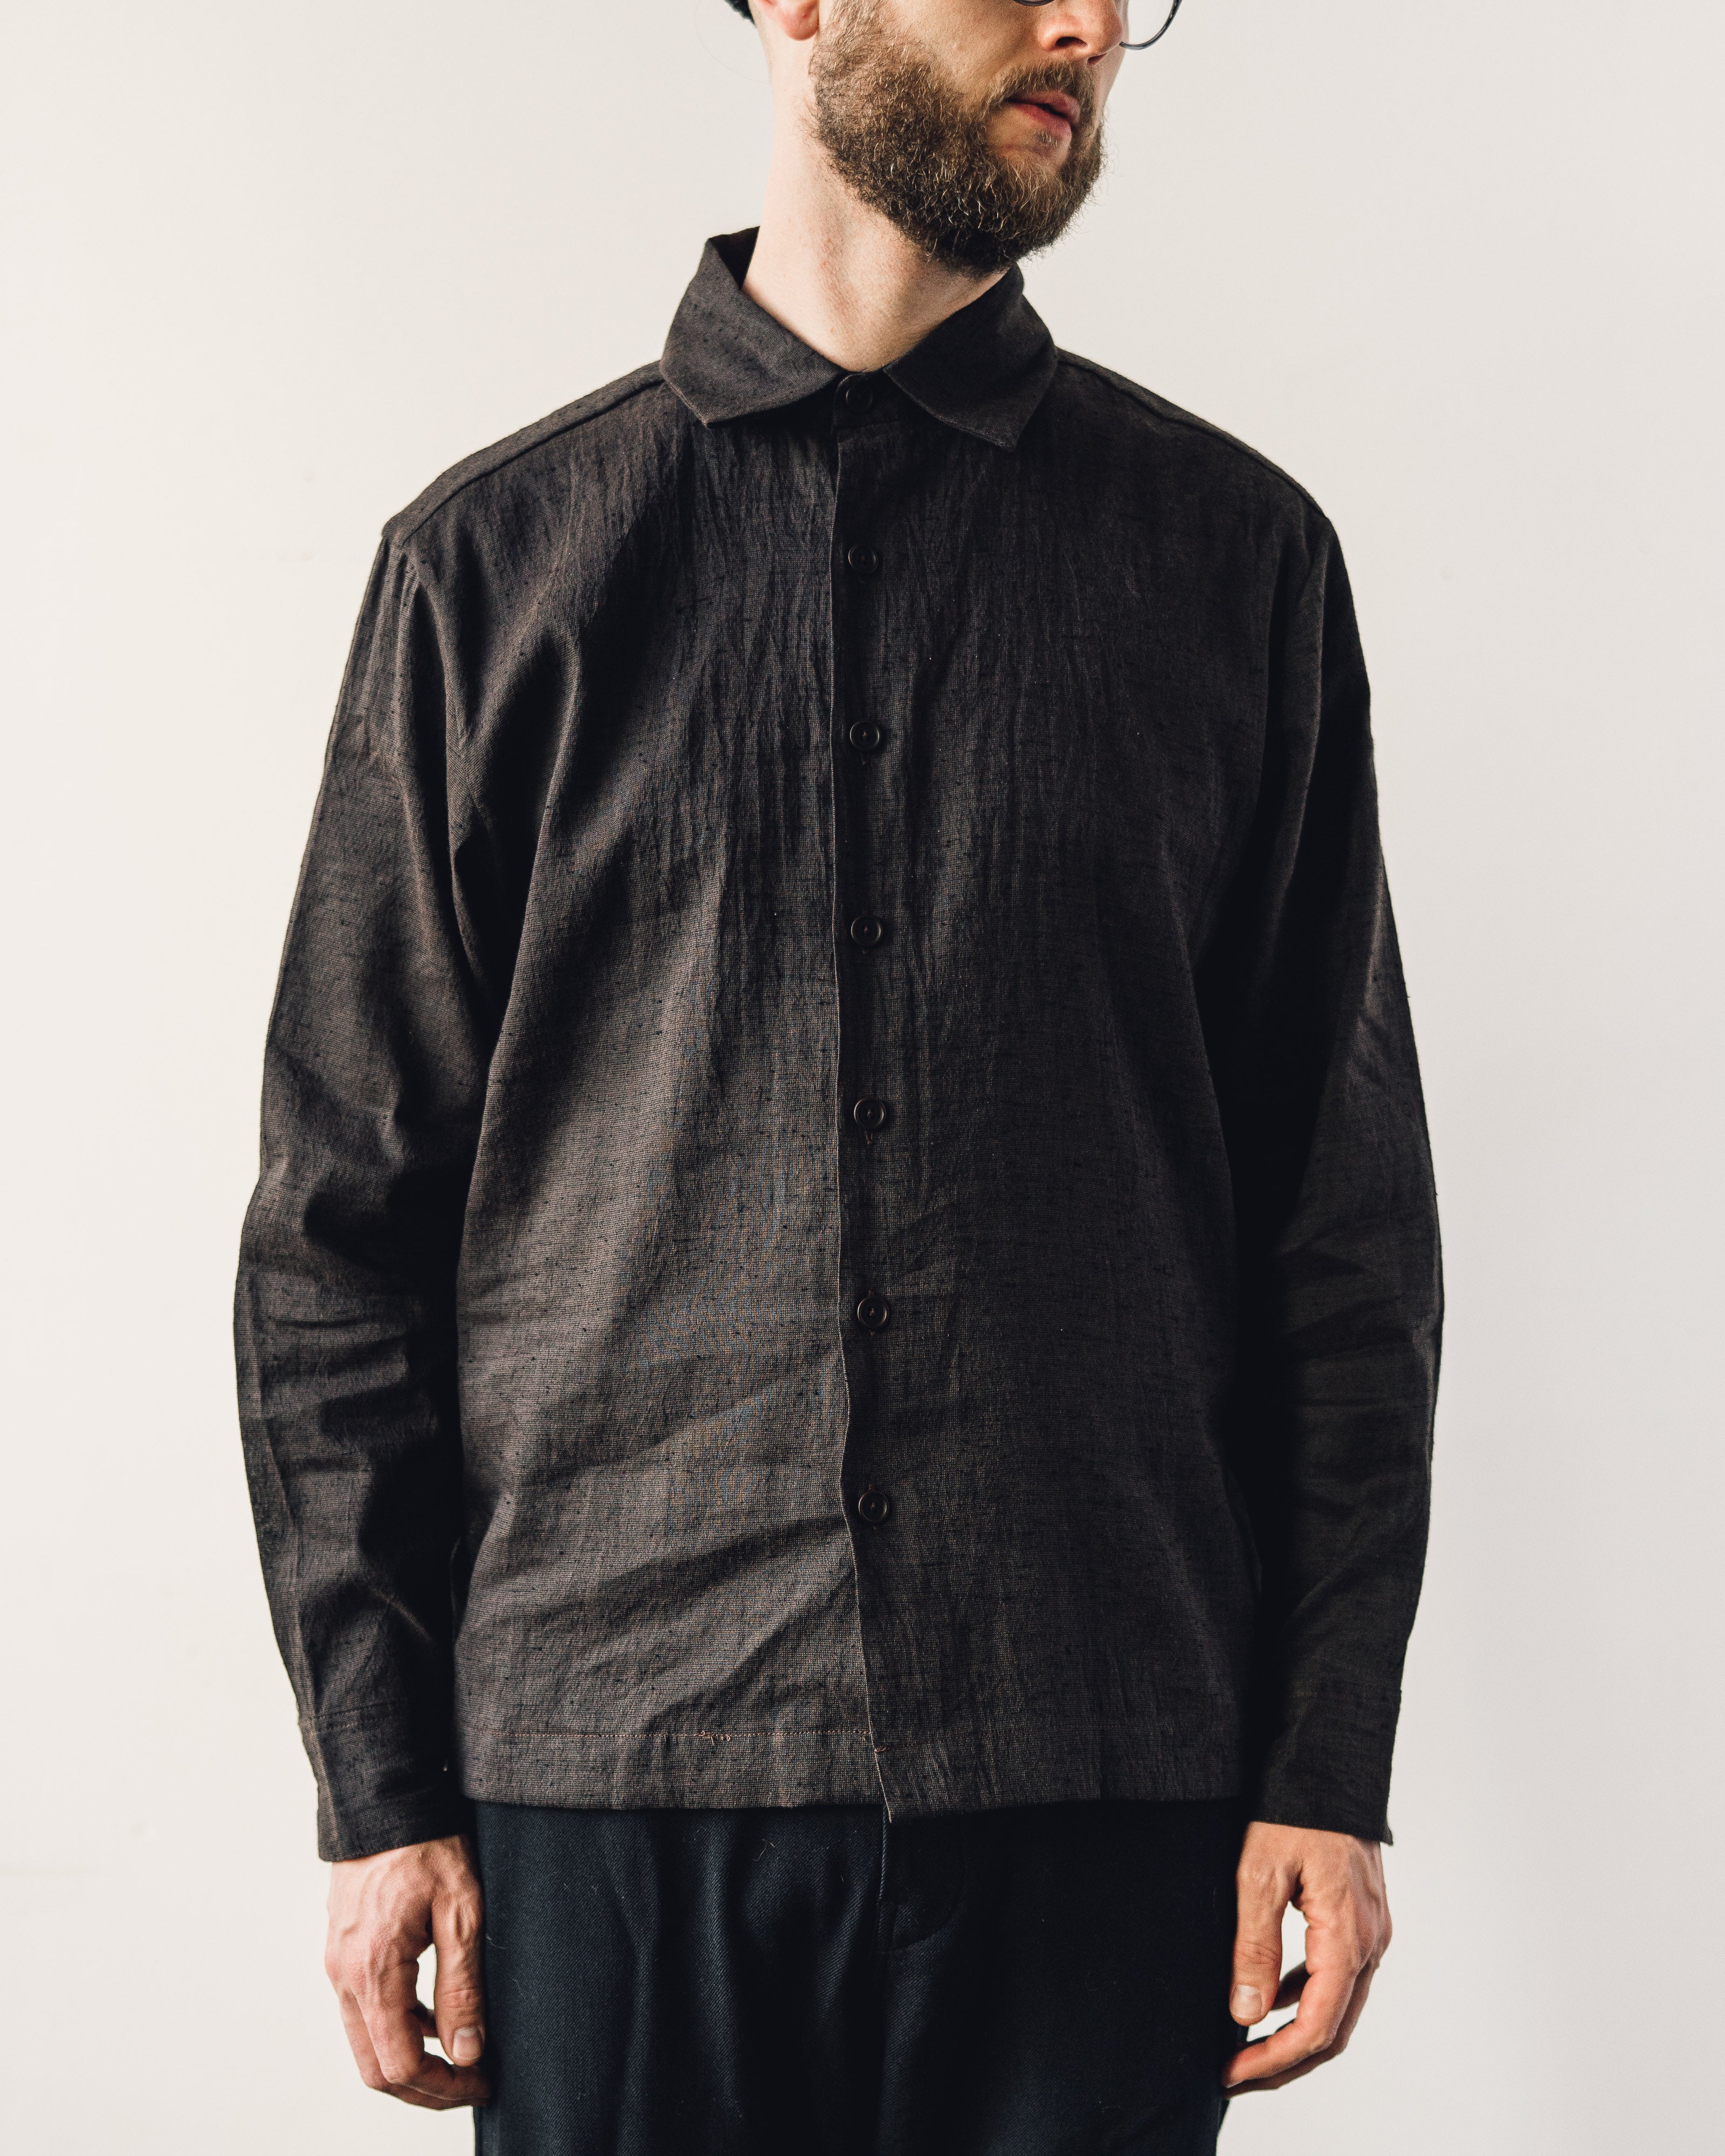 Evan Kinori Flat Hem Shirt, Brown Summercloth | Glasswing